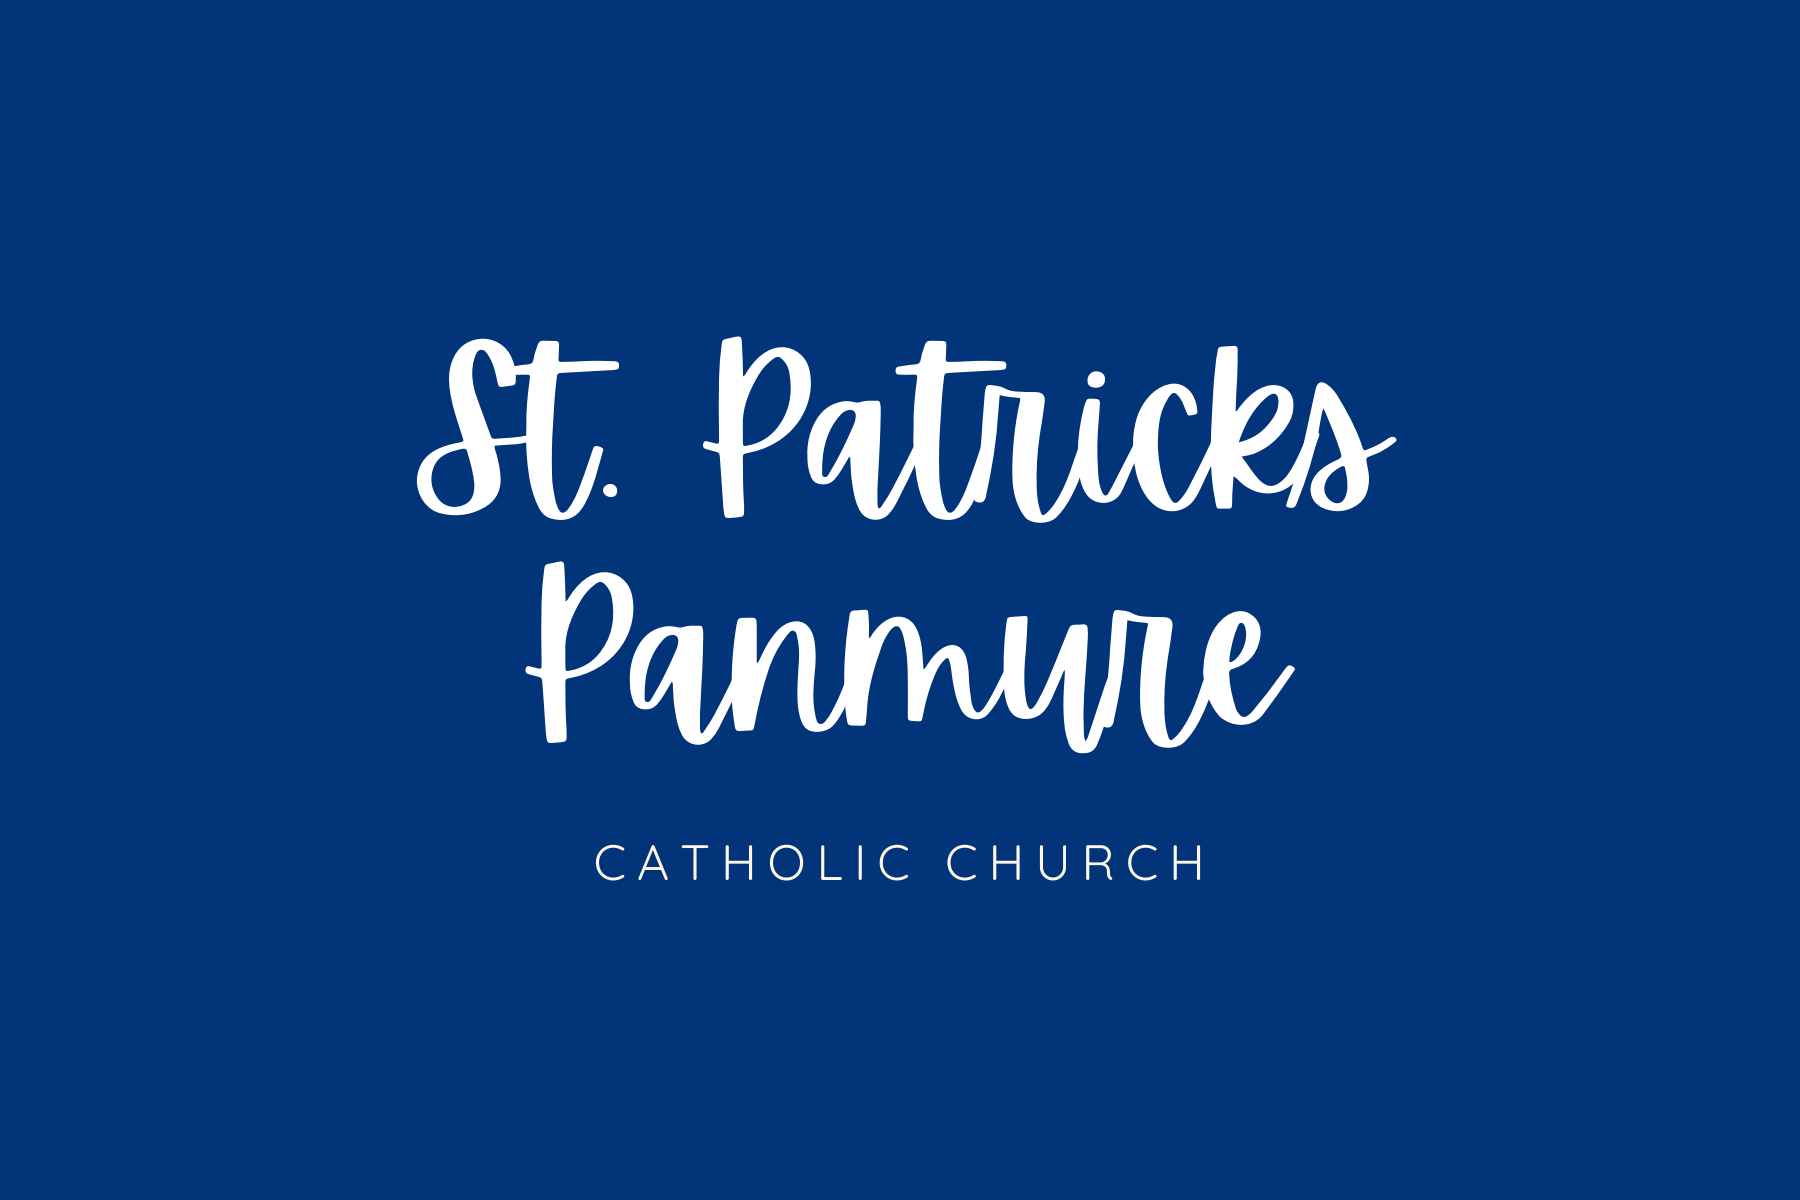 St. Patricks Panmure